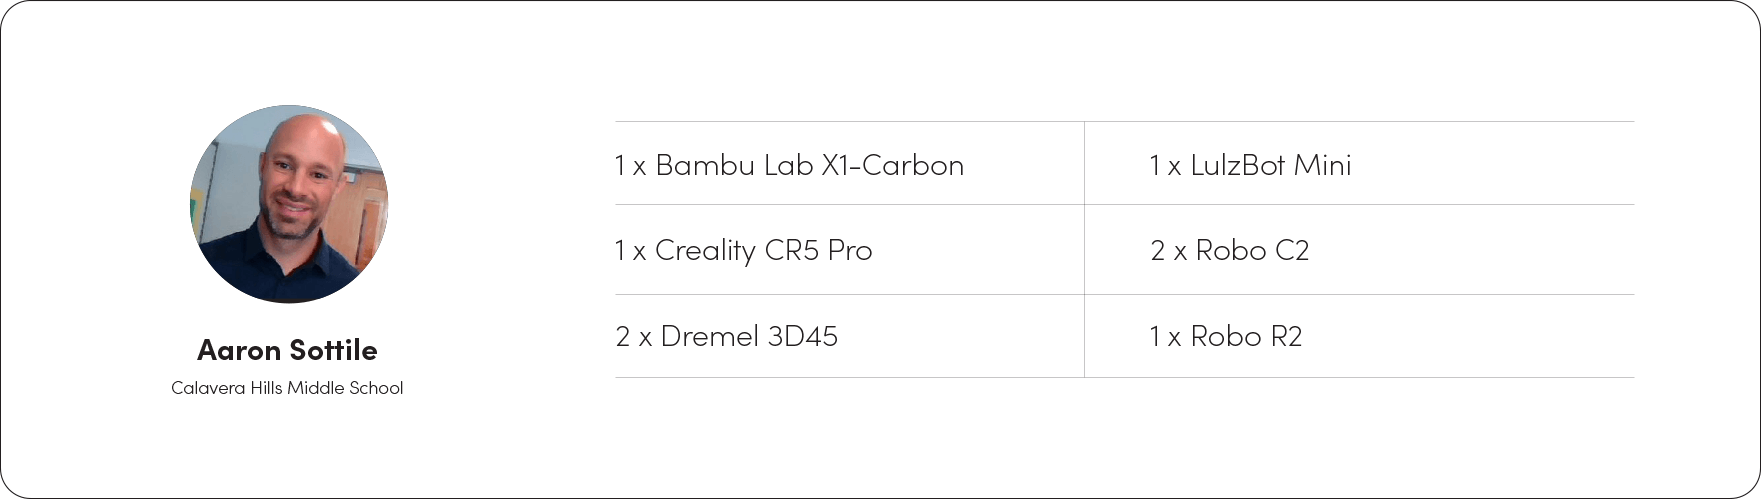 A headshot image of teacher Aaron Sottile with the following list - 1 x Bambu Lab X1-Carbon, 1 x Creality CR5 Pro, 2 x Dremel 3D45, 1 x LulzBot Mini, 2 x Robo C2, 1 x Robo R2.